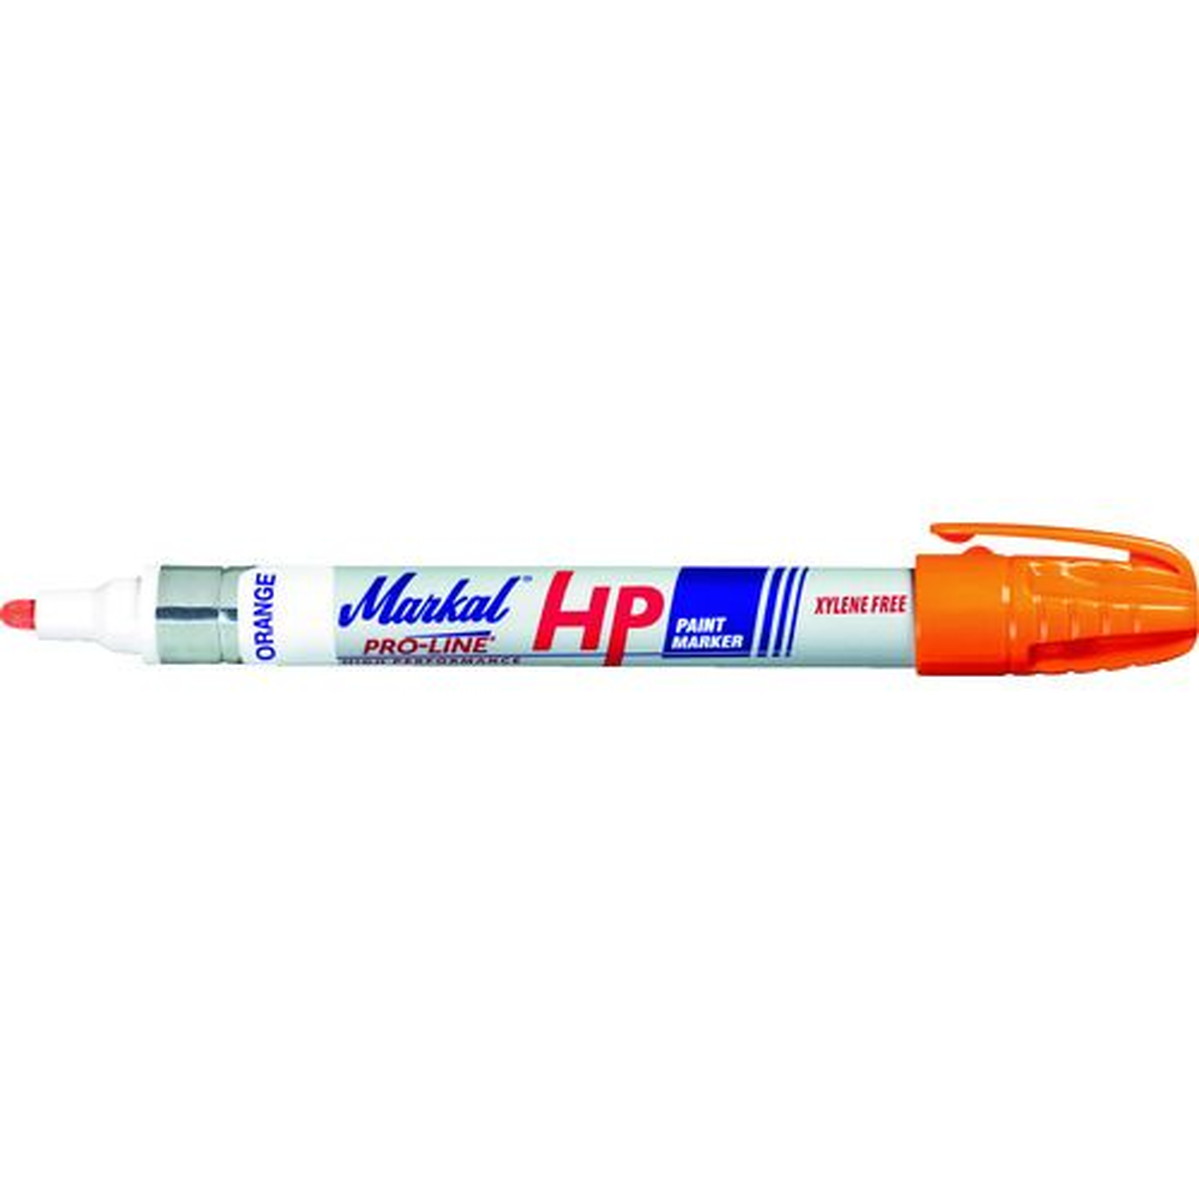 LACO Markal 工業用マーカー 「PROLINE HP」 オレンジ 1本 (96964)